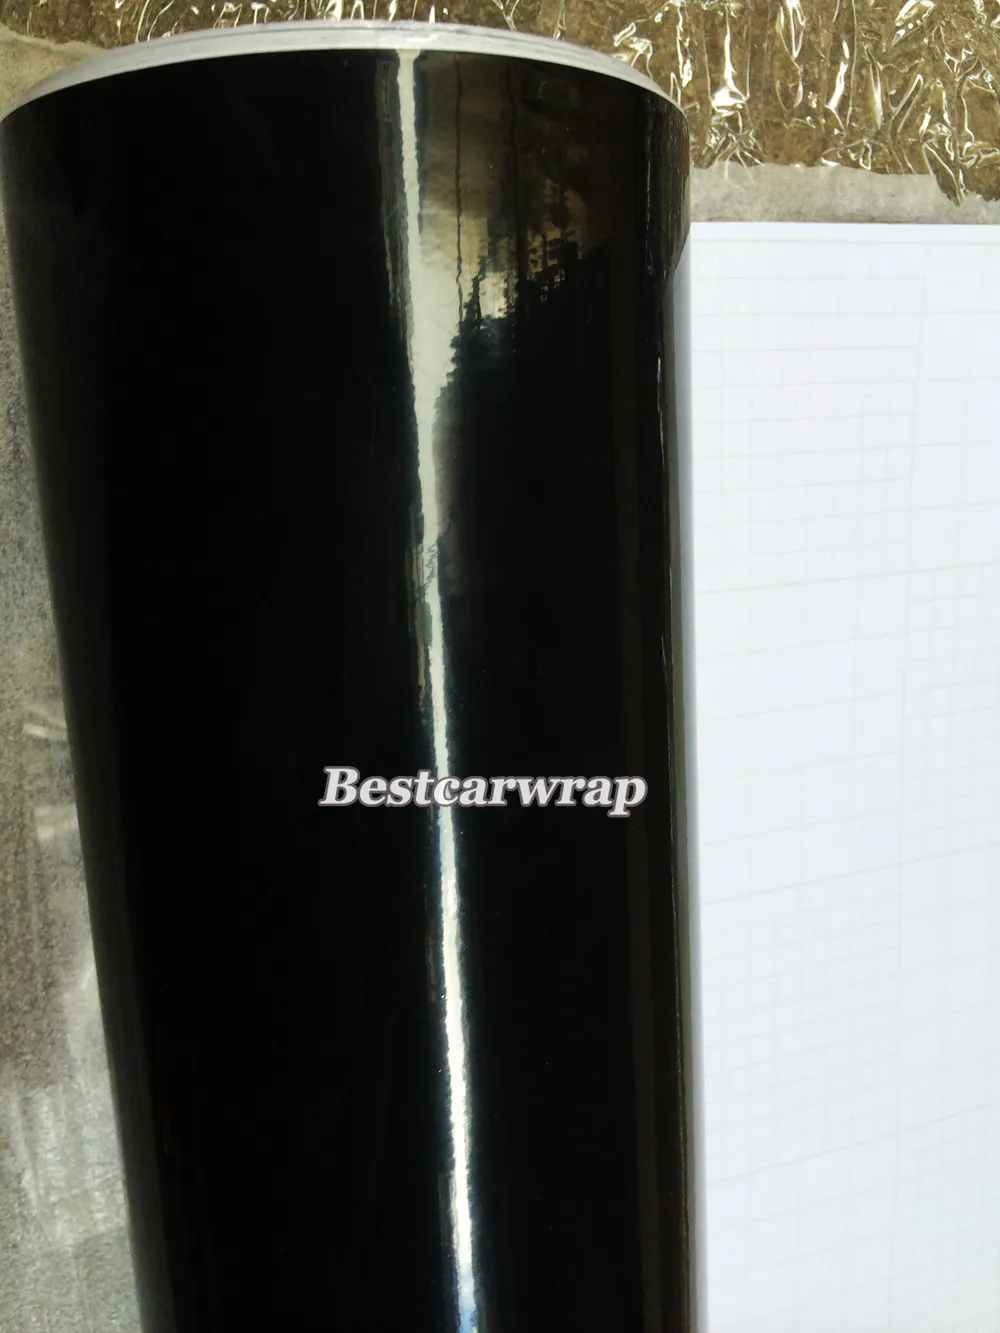 Roof Wrap 3 Layers Ultra Glossy Vinyl Air Bubble Free High Gloss Black Car Wrap Film Shiny Sticker Size 1.35x15m/Roll